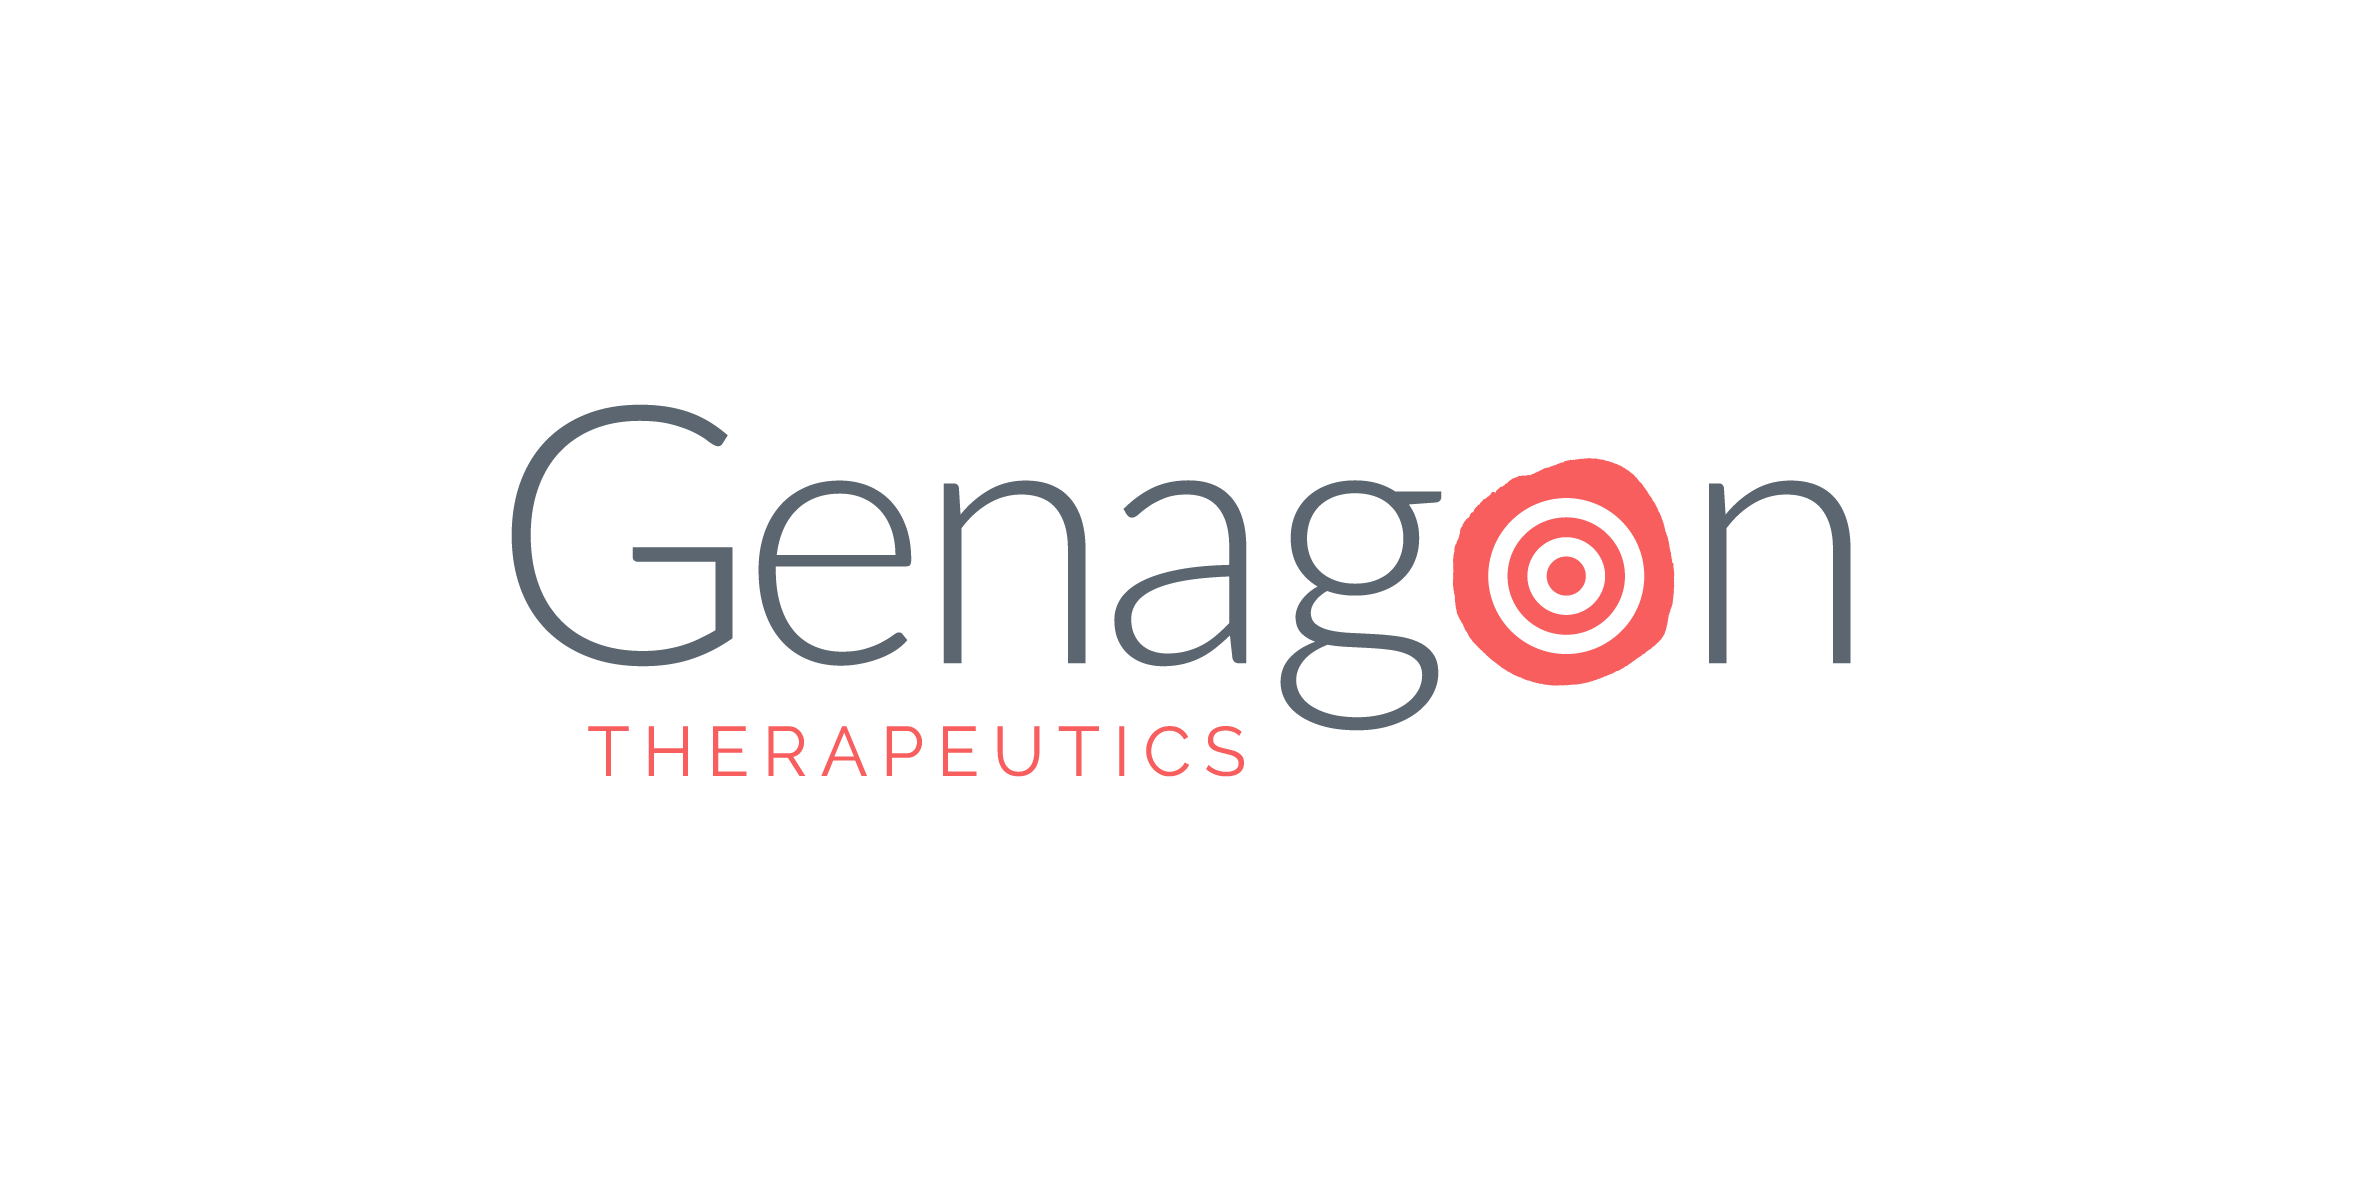 Genagon Therapeutics